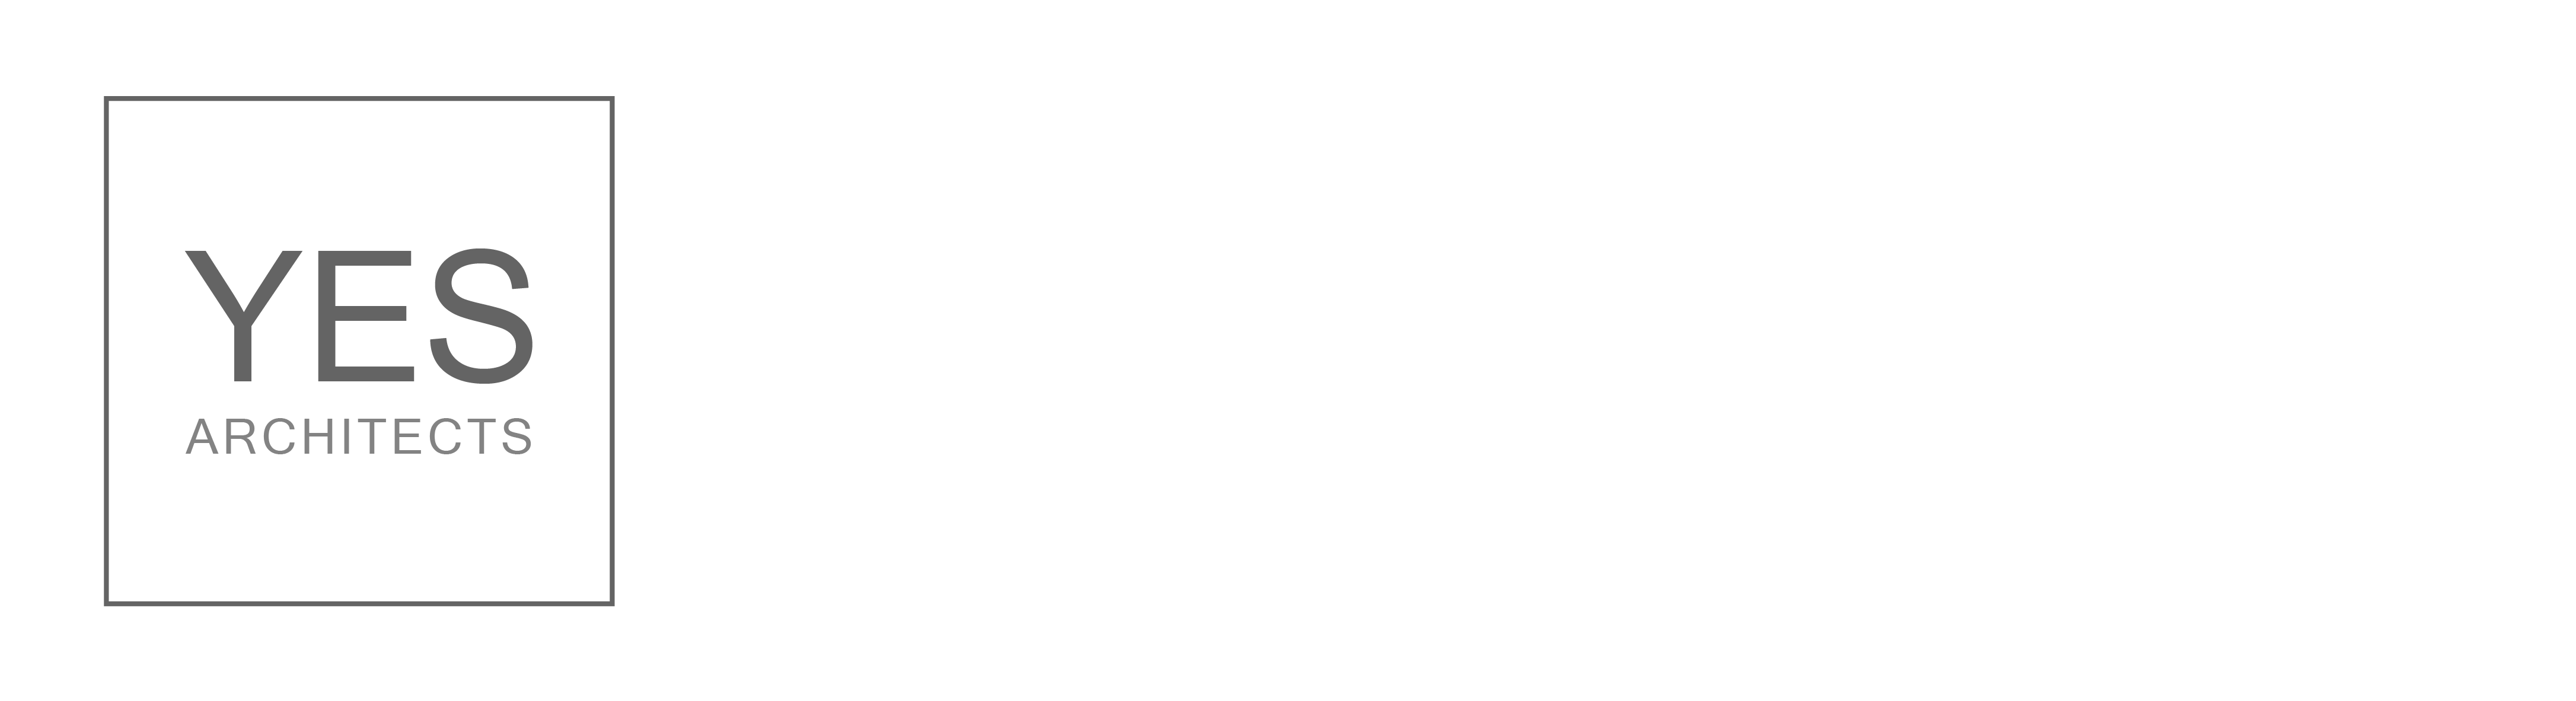 Yes Architects